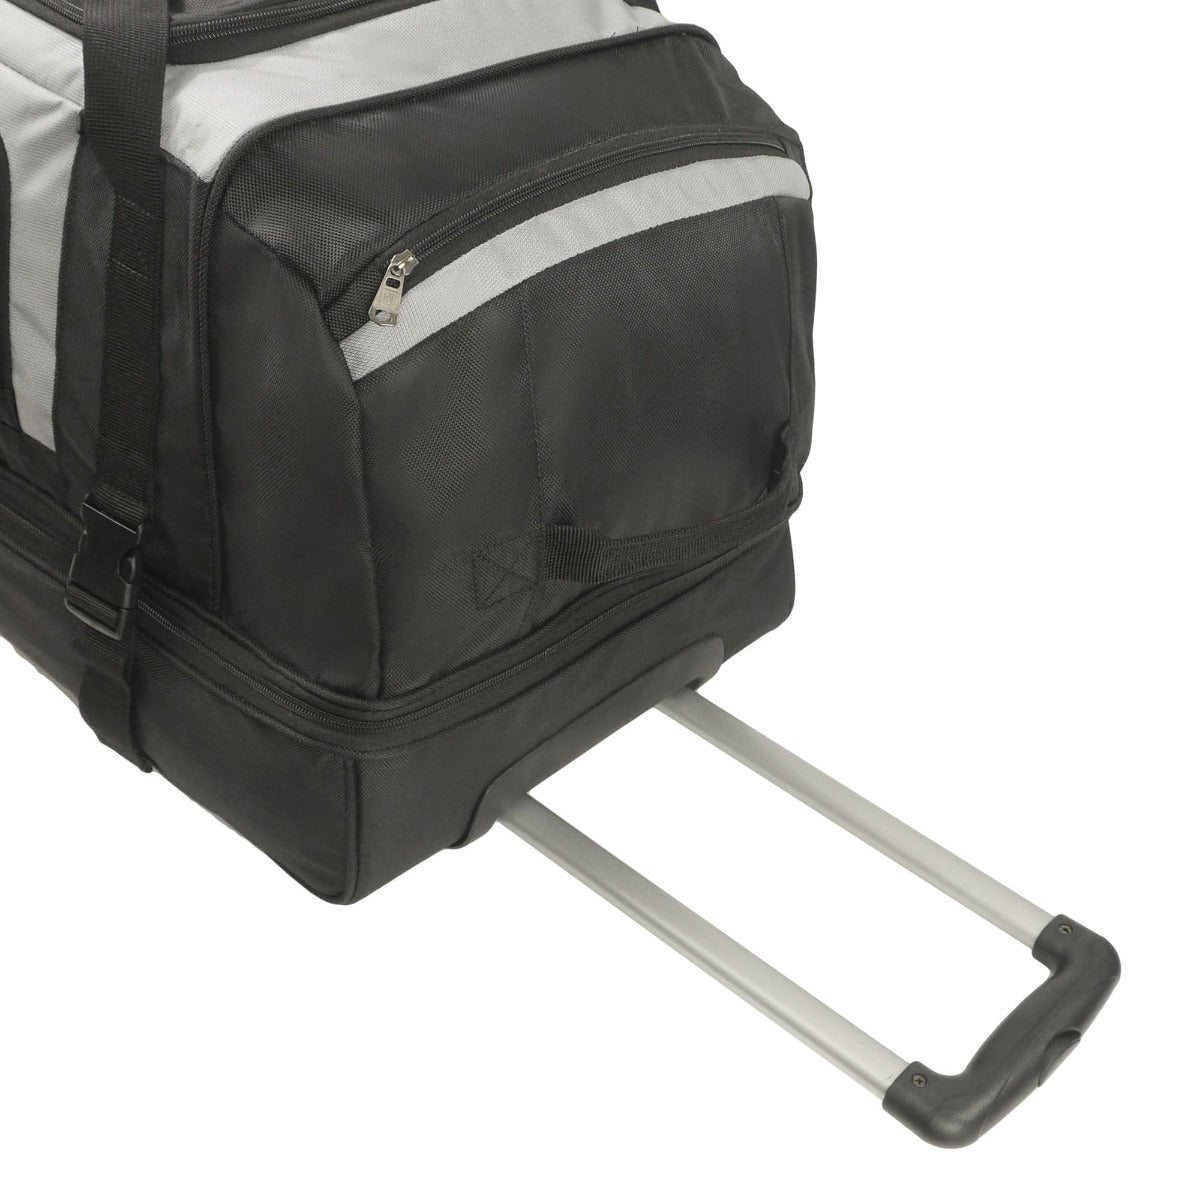 fcity.in - 60 L Duffle Bag Accessoriestravel Bagssmall Travel Bag Strolley